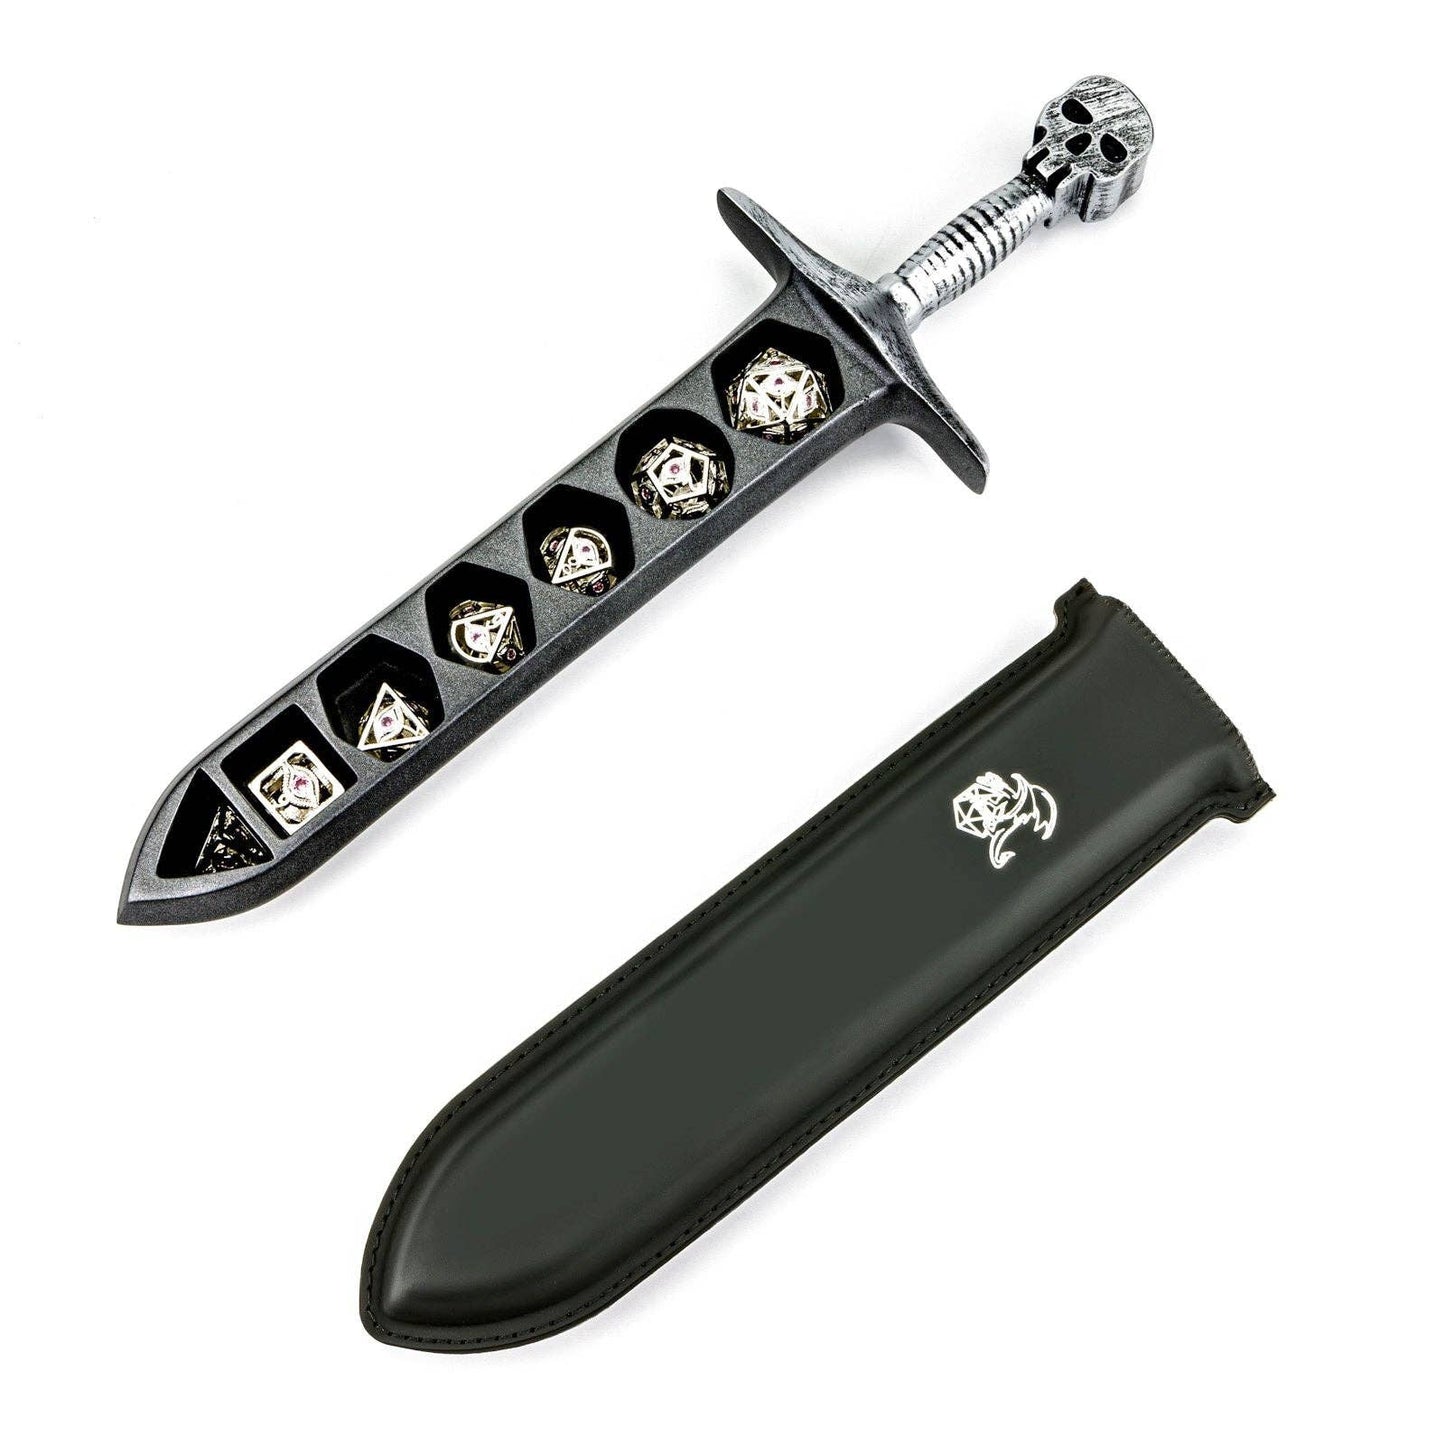 Hymgho Grim Dagger Dice Case with sheath cover - Silver